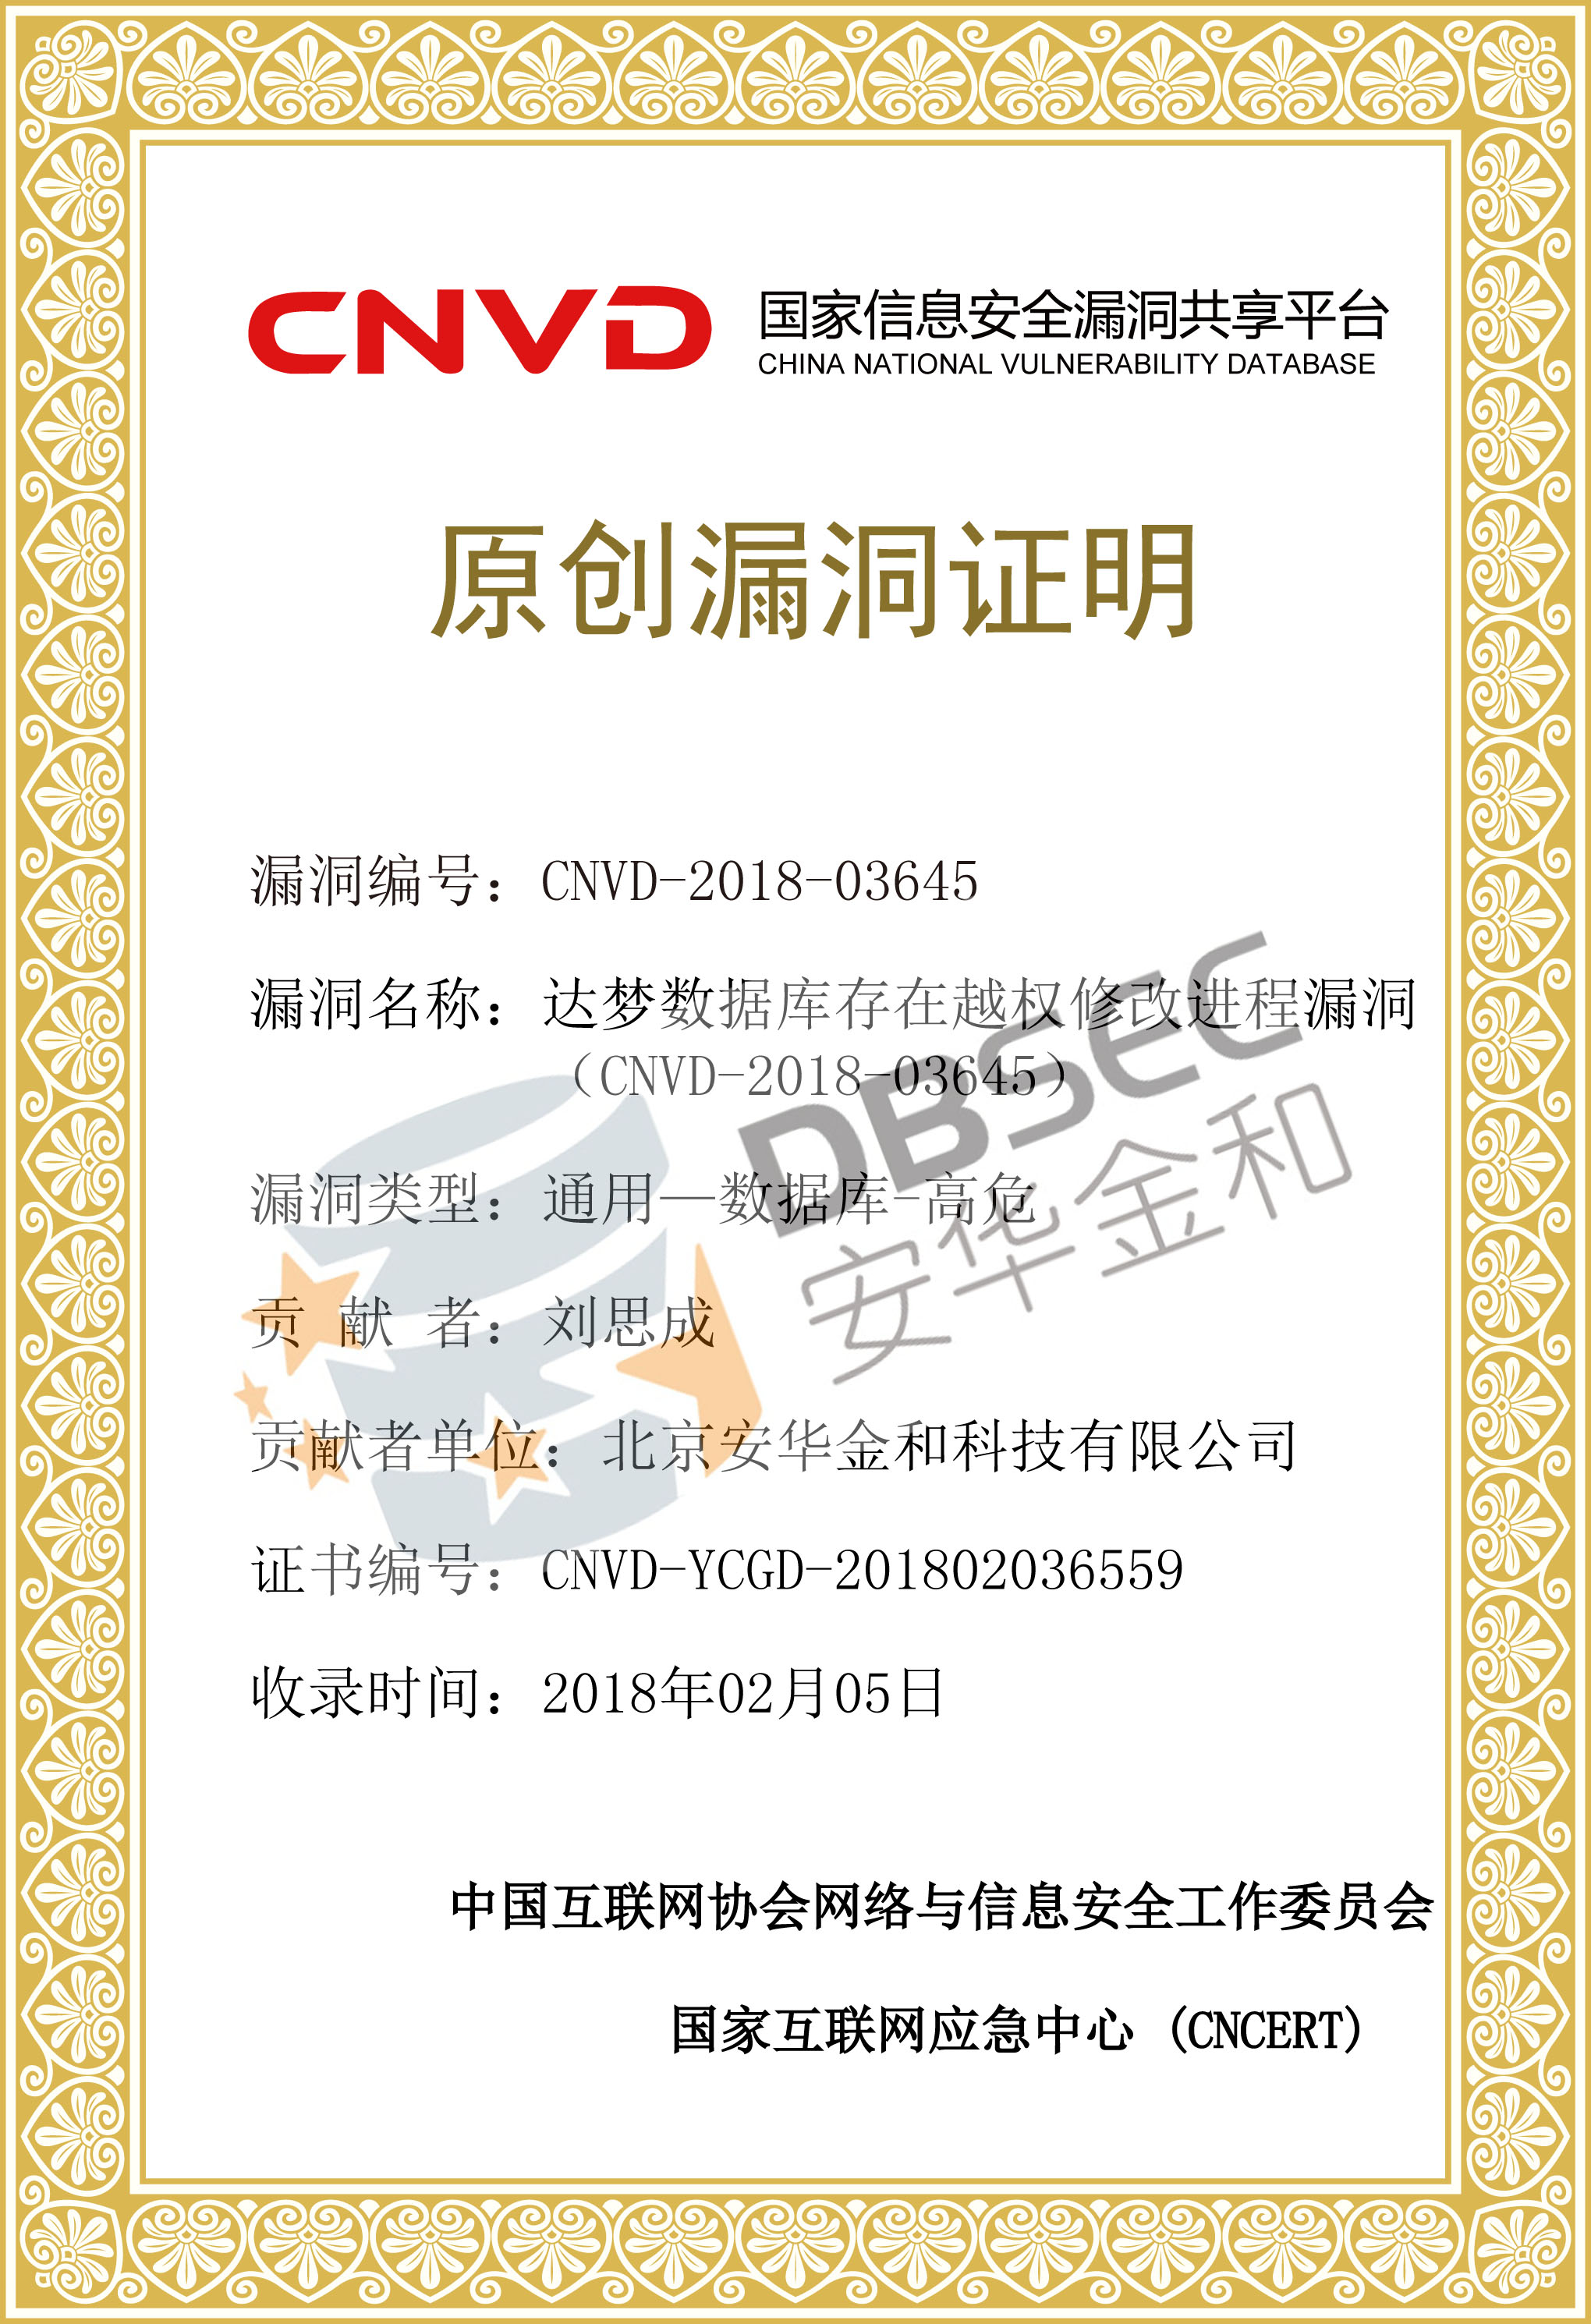 CNVD-YCGD-201802036559